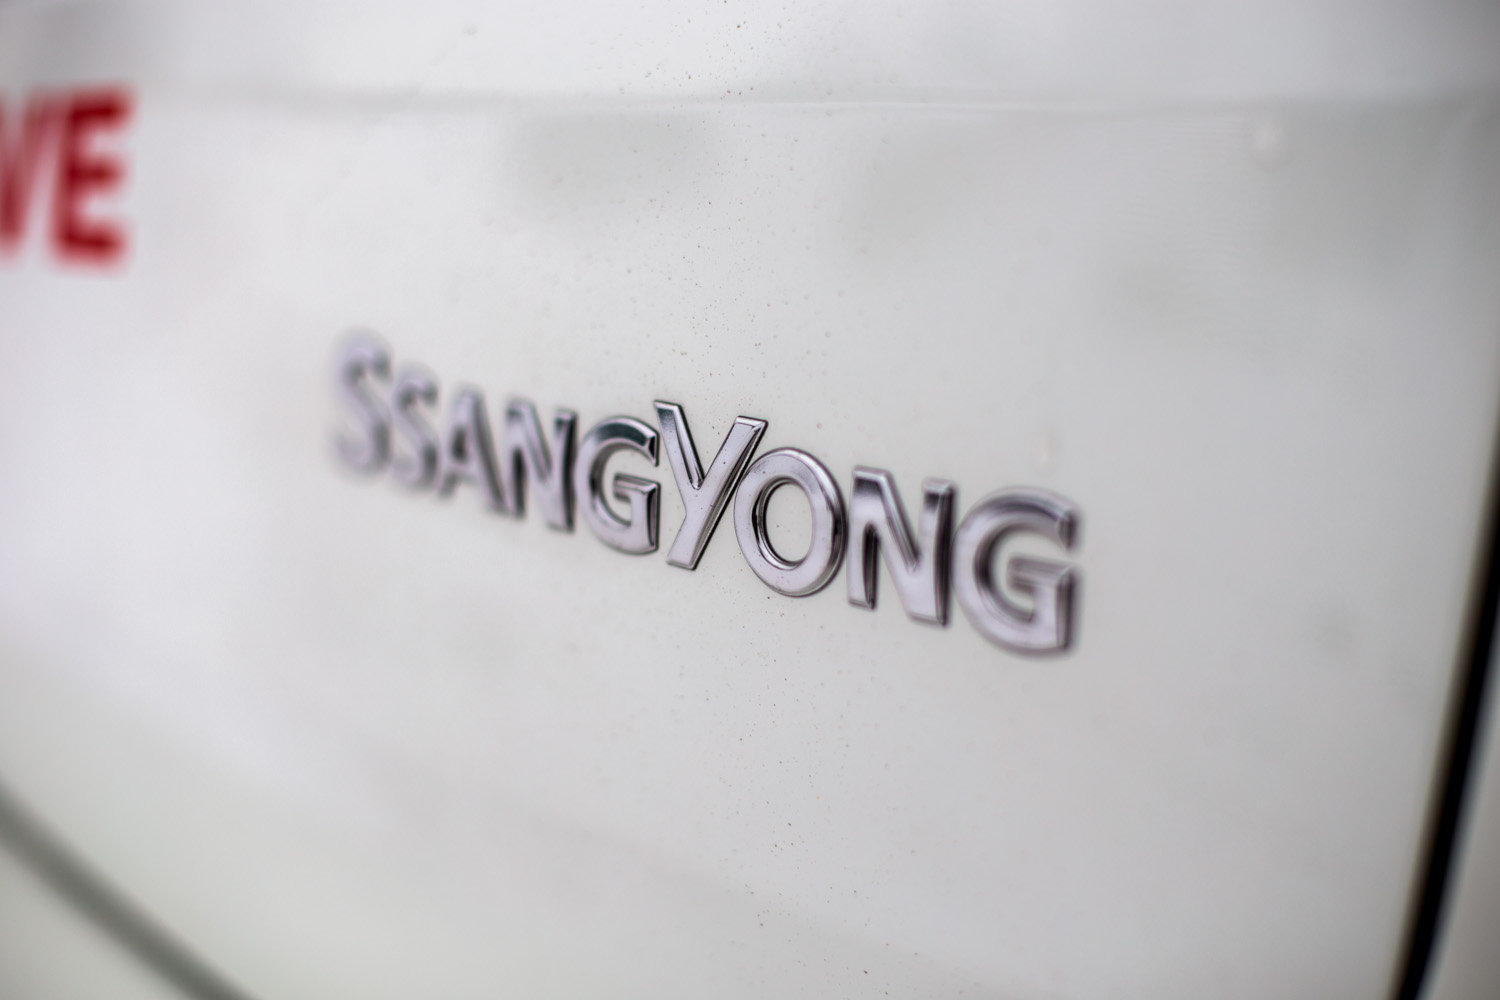 SsangYong Stavic